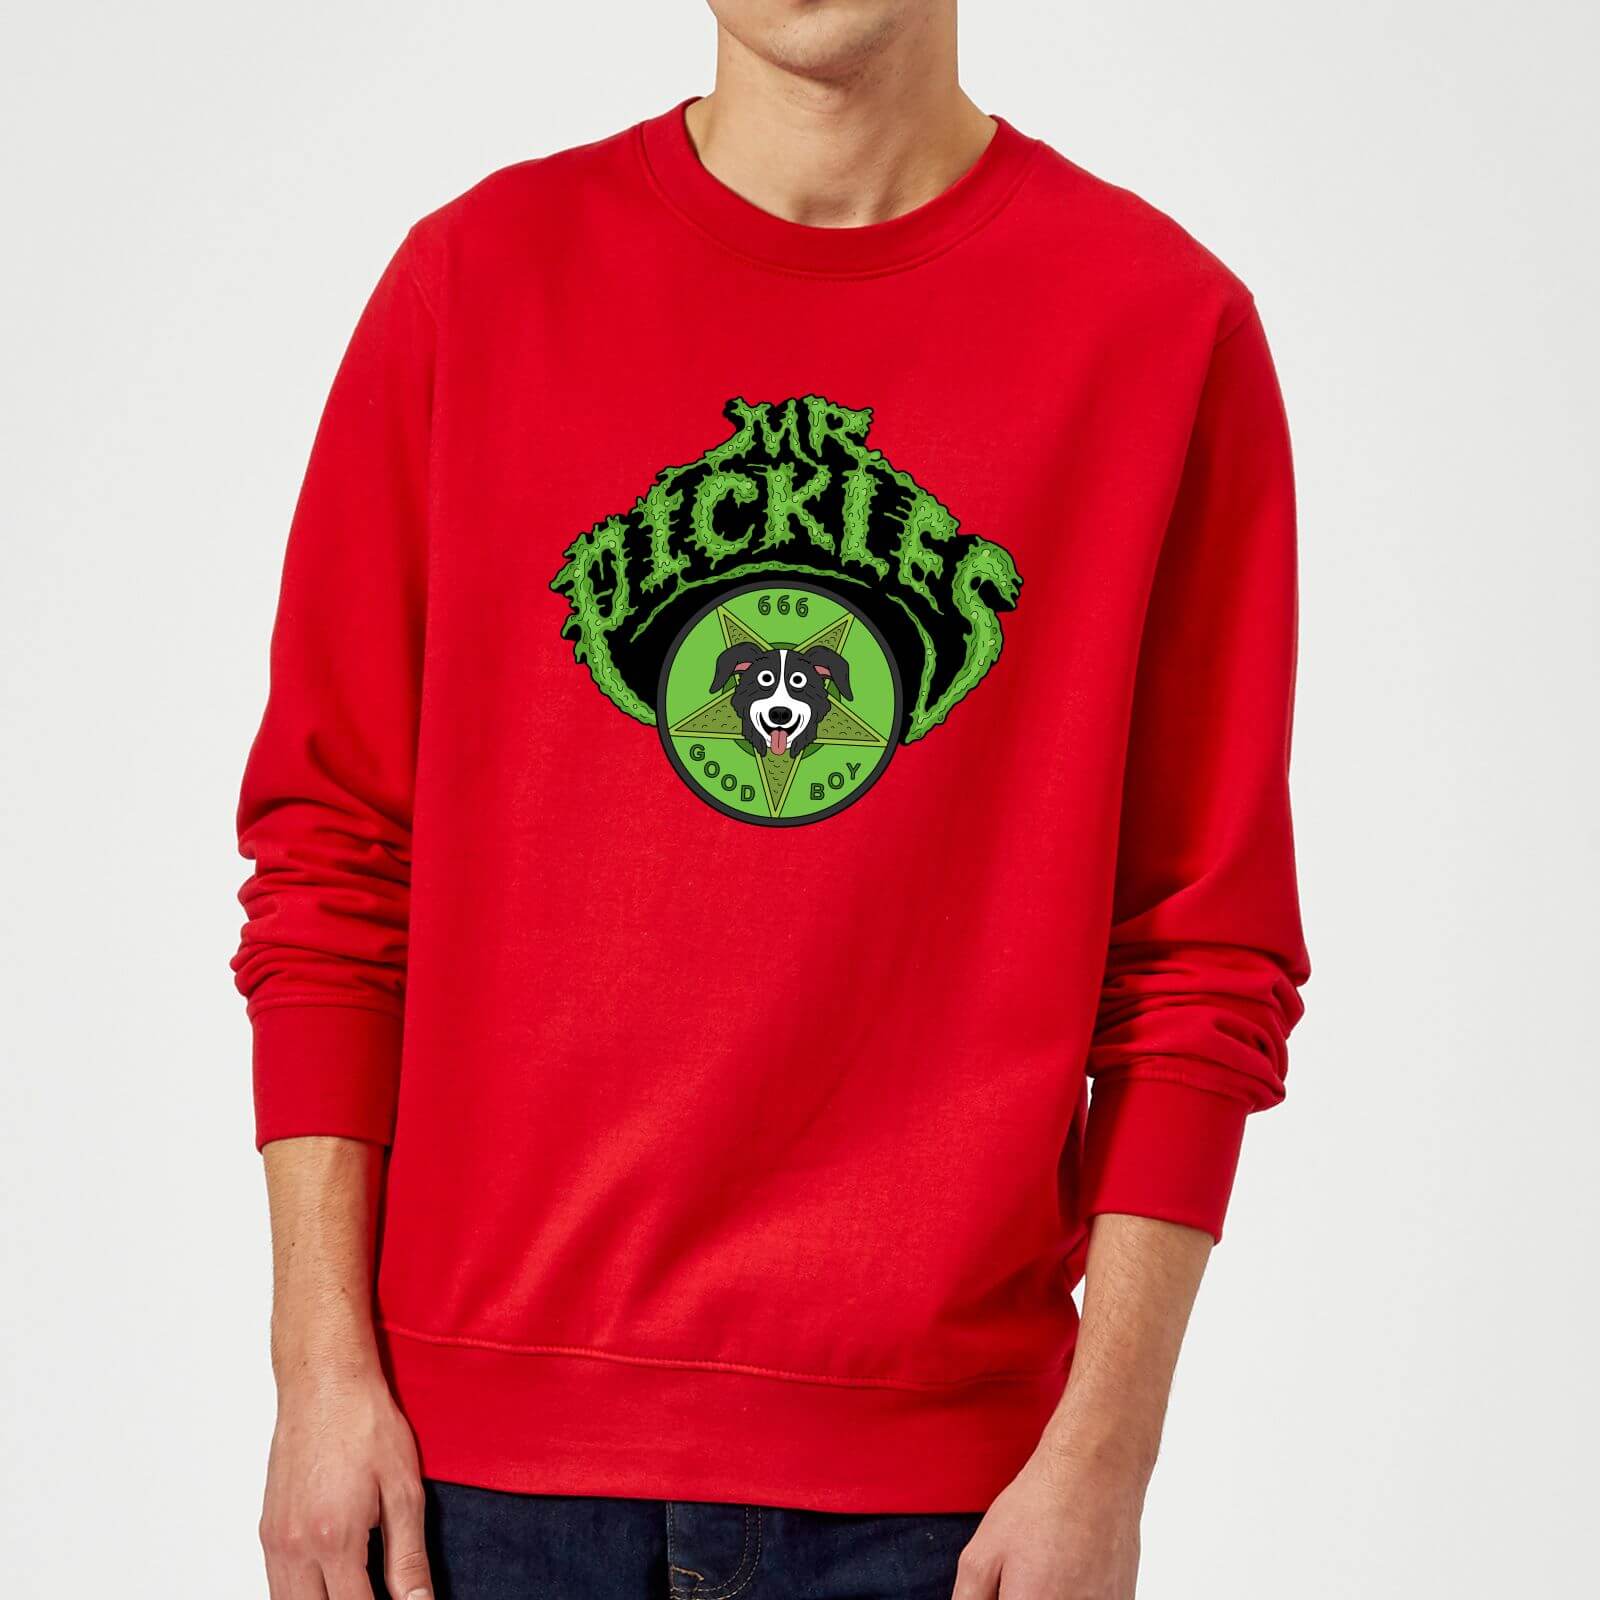 Mr Pickles Logo Sweatshirt - Red - S - Red